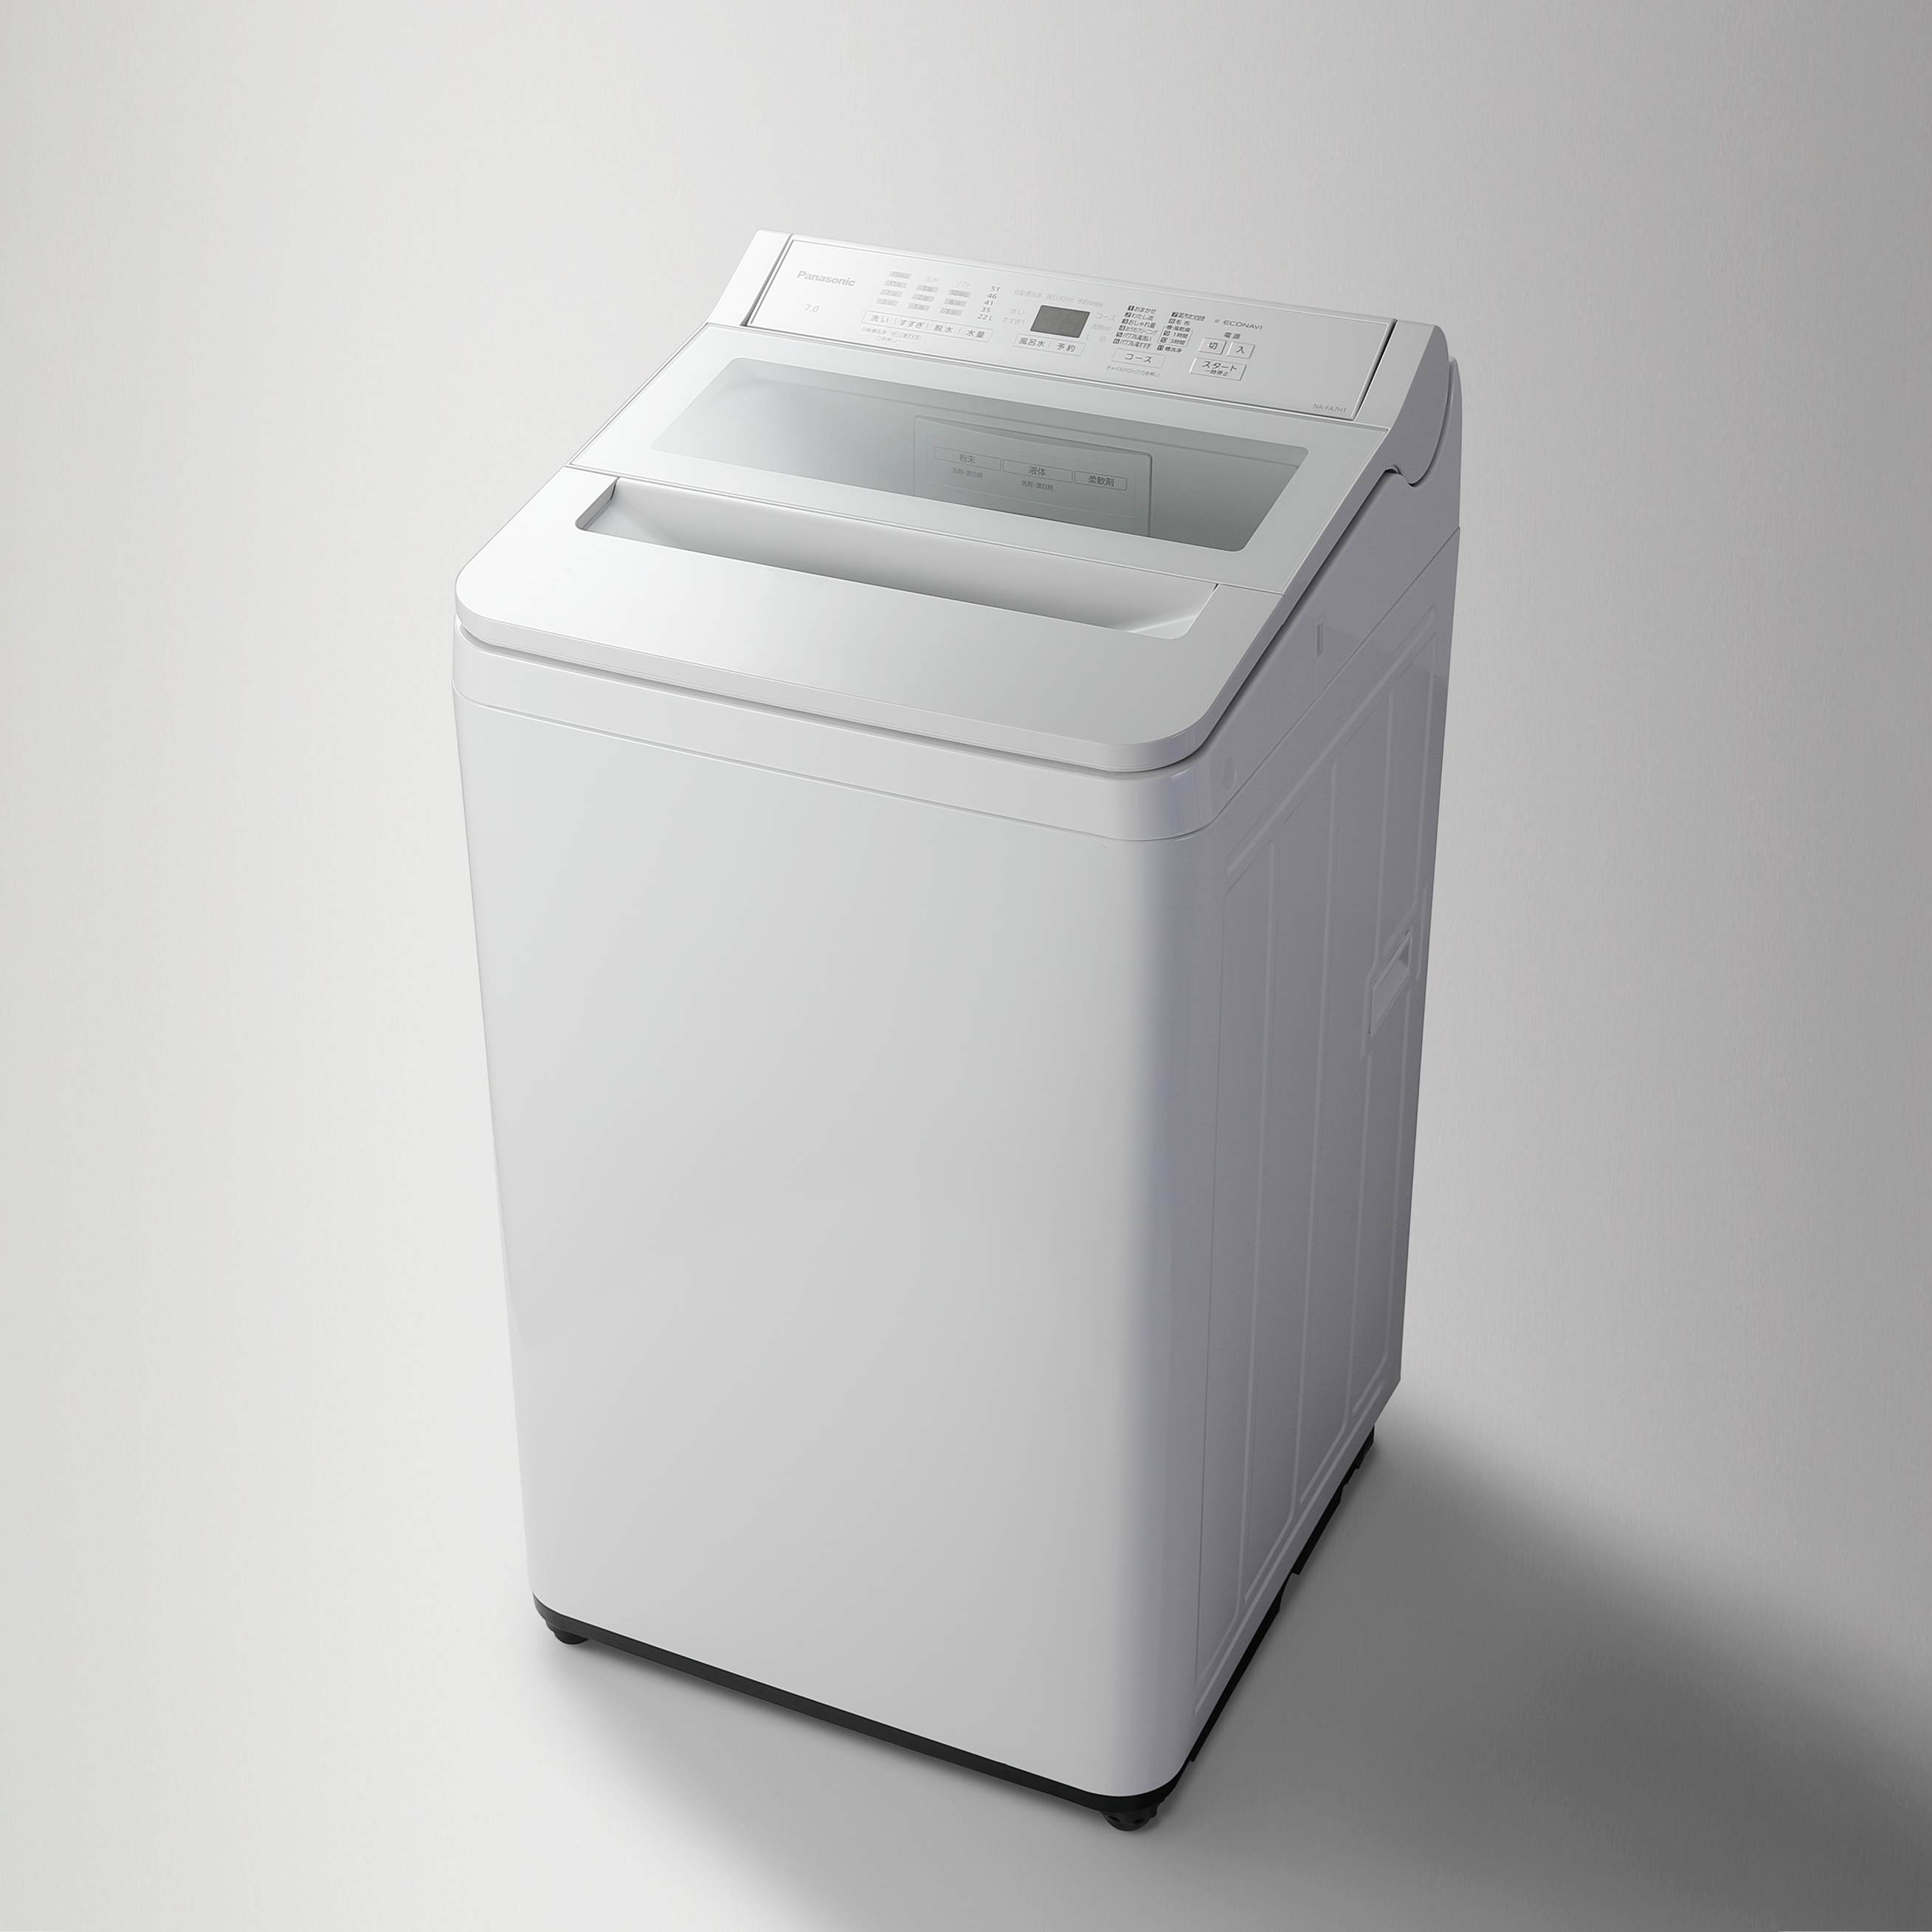 Panasonic洗濯機 7kg G - 生活家電